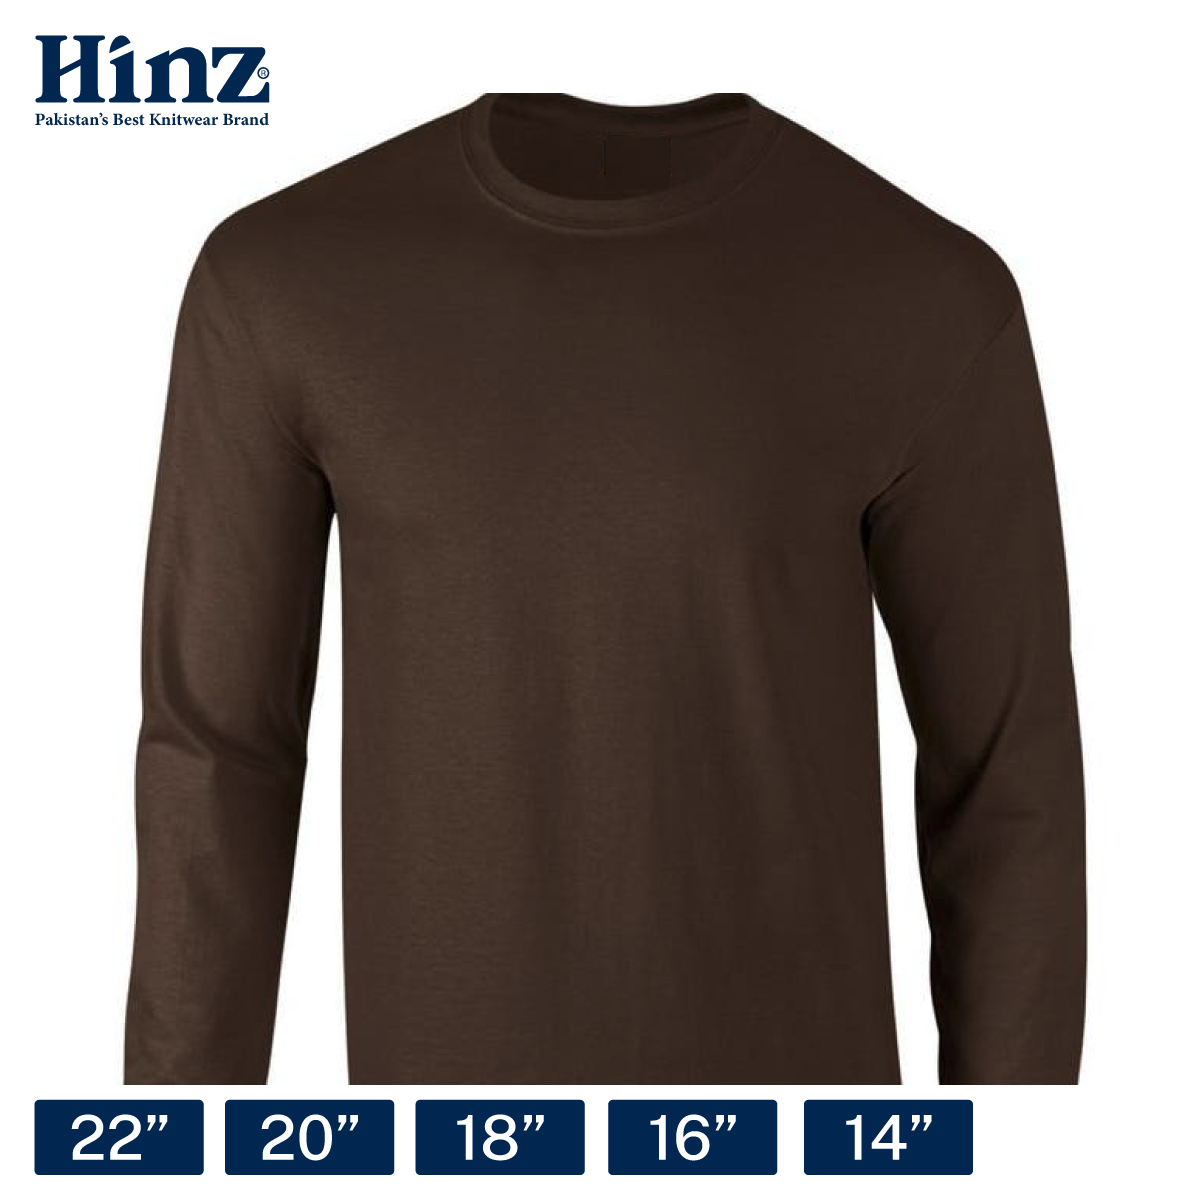 Regular Fit Crew Neck Long Sleeve Sweatshirt - Charcoal – Hinz Knit